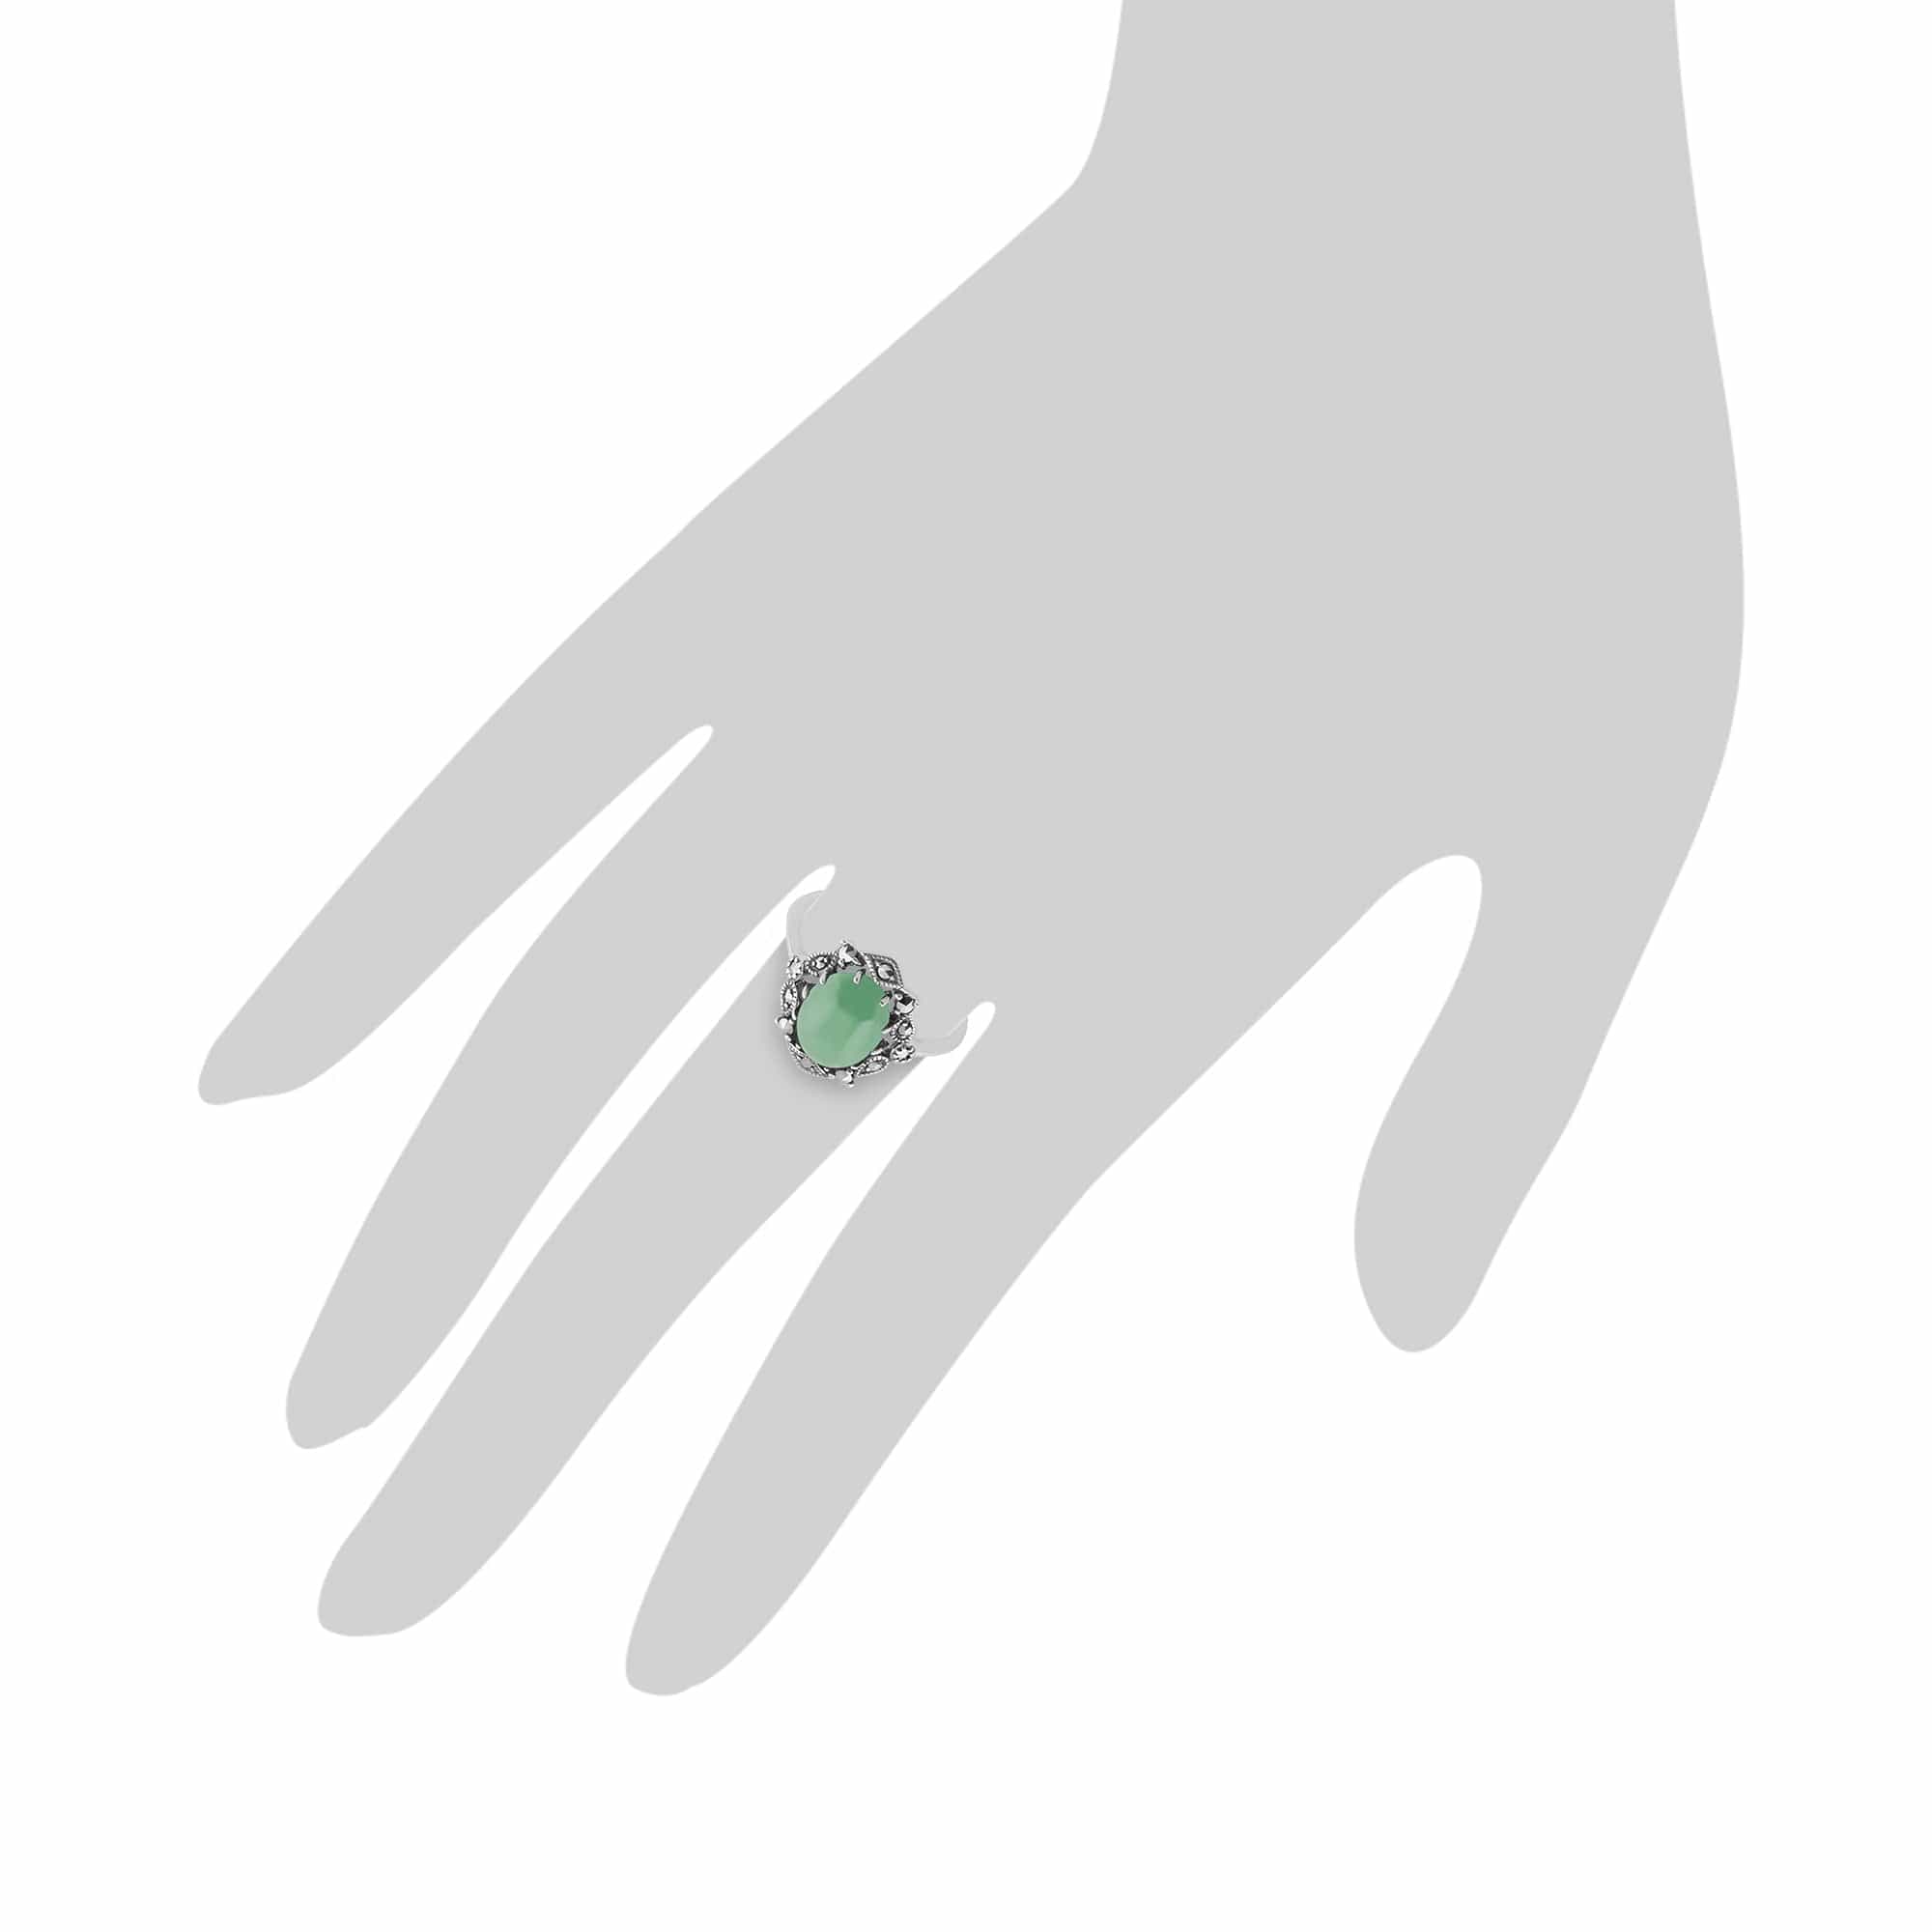 Art Nouveau Style Oval Green Jade Cabochon & Marcasite Statement Ring - Gemondo